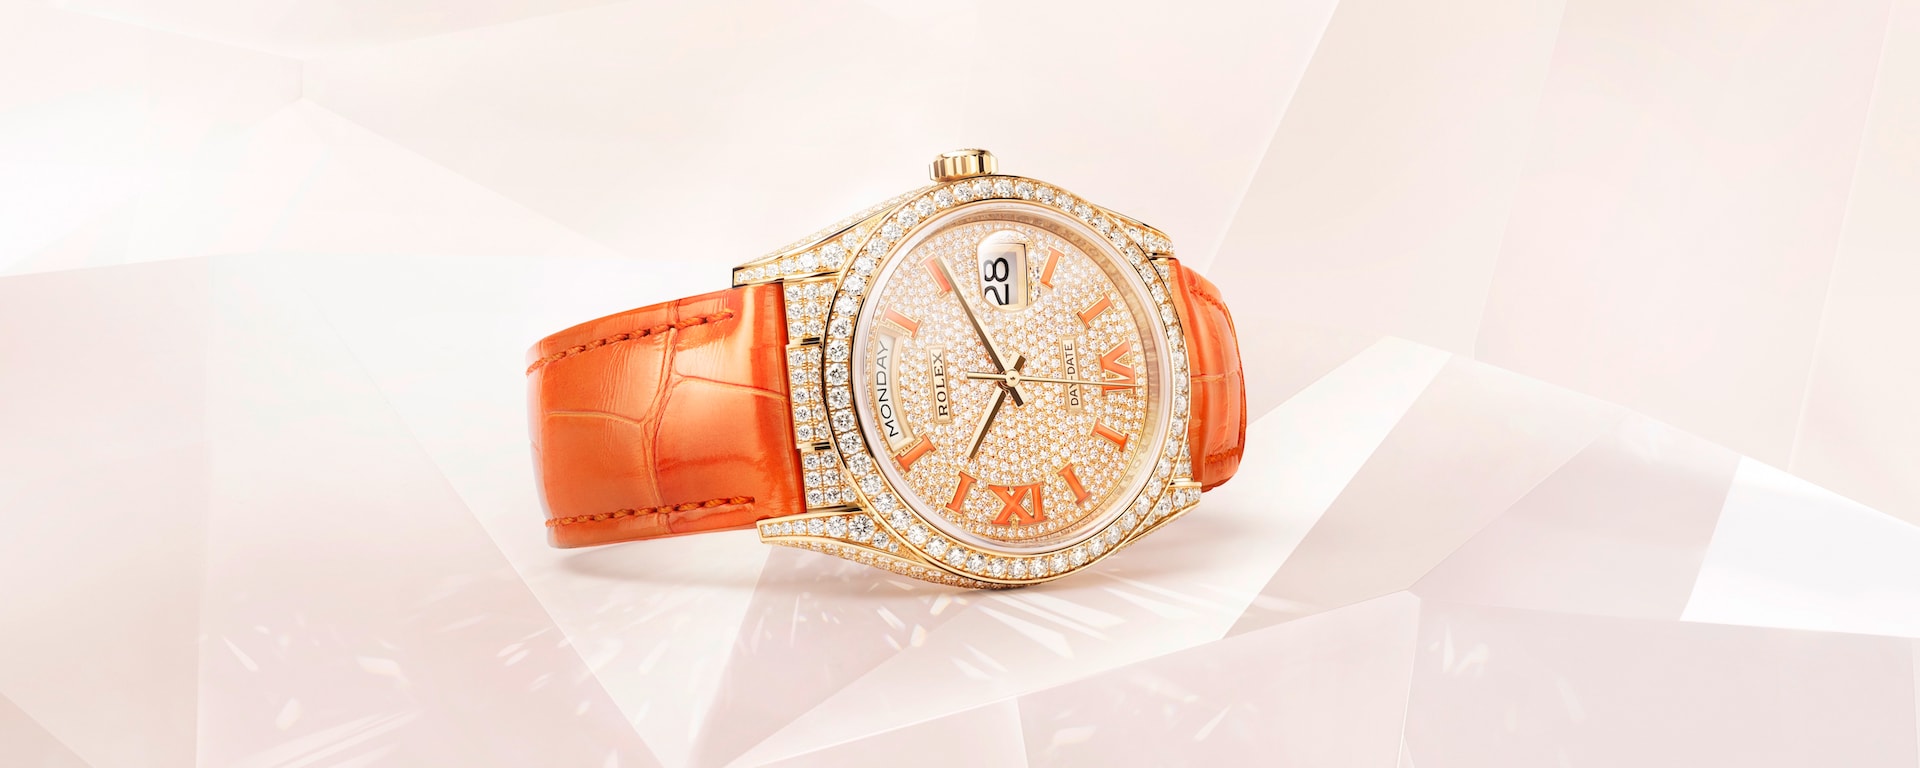 Rolex Day-Date 36mm in diamonds and bold orange. 